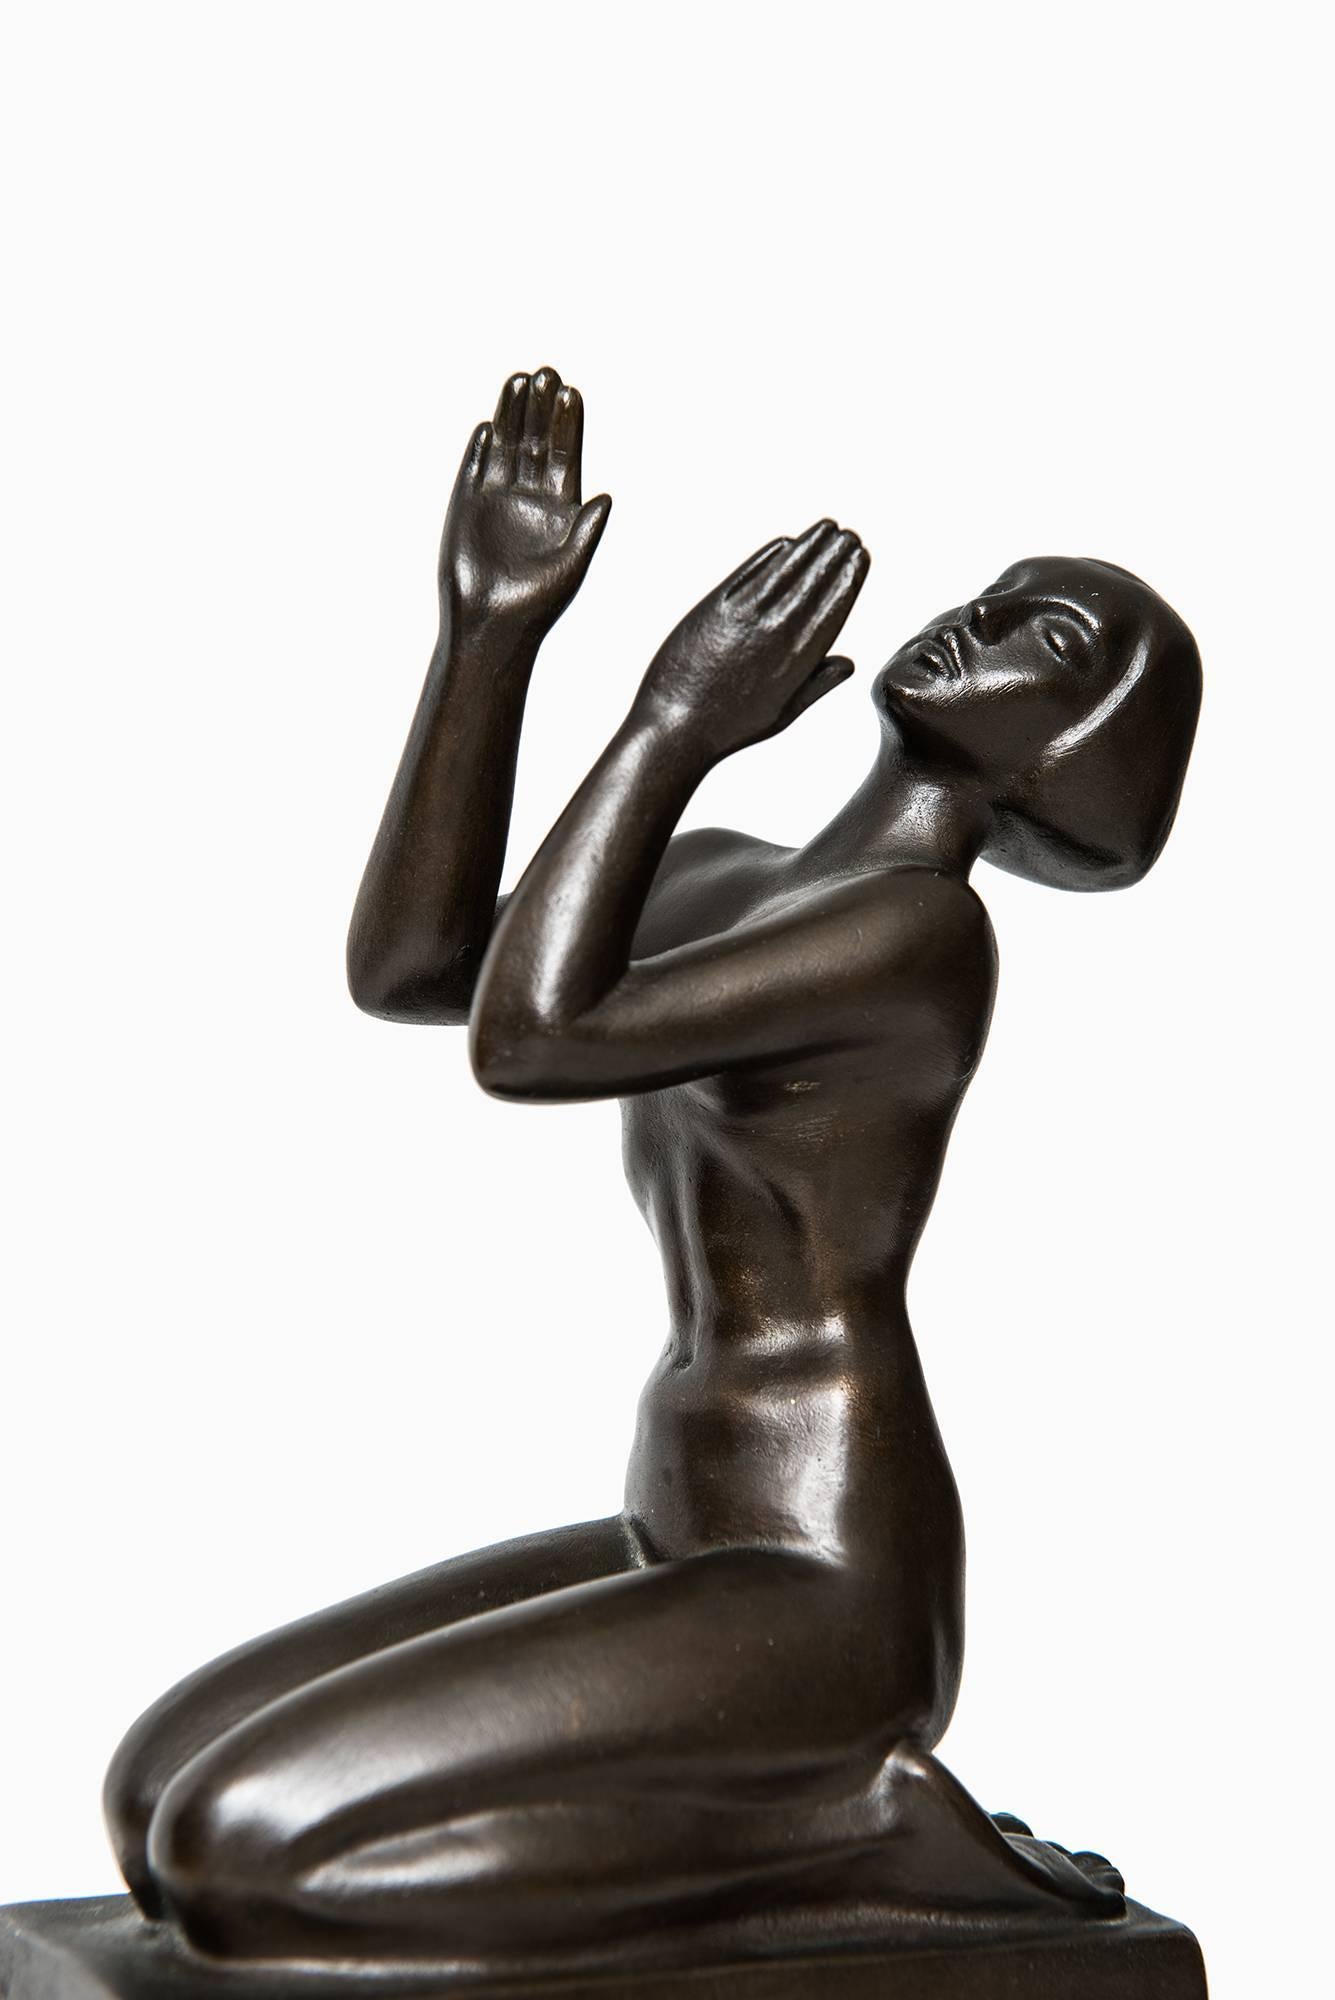 Suédois Sculpture de Knut Jern en bronze de la fonderie Otto Meyers en Suède en vente